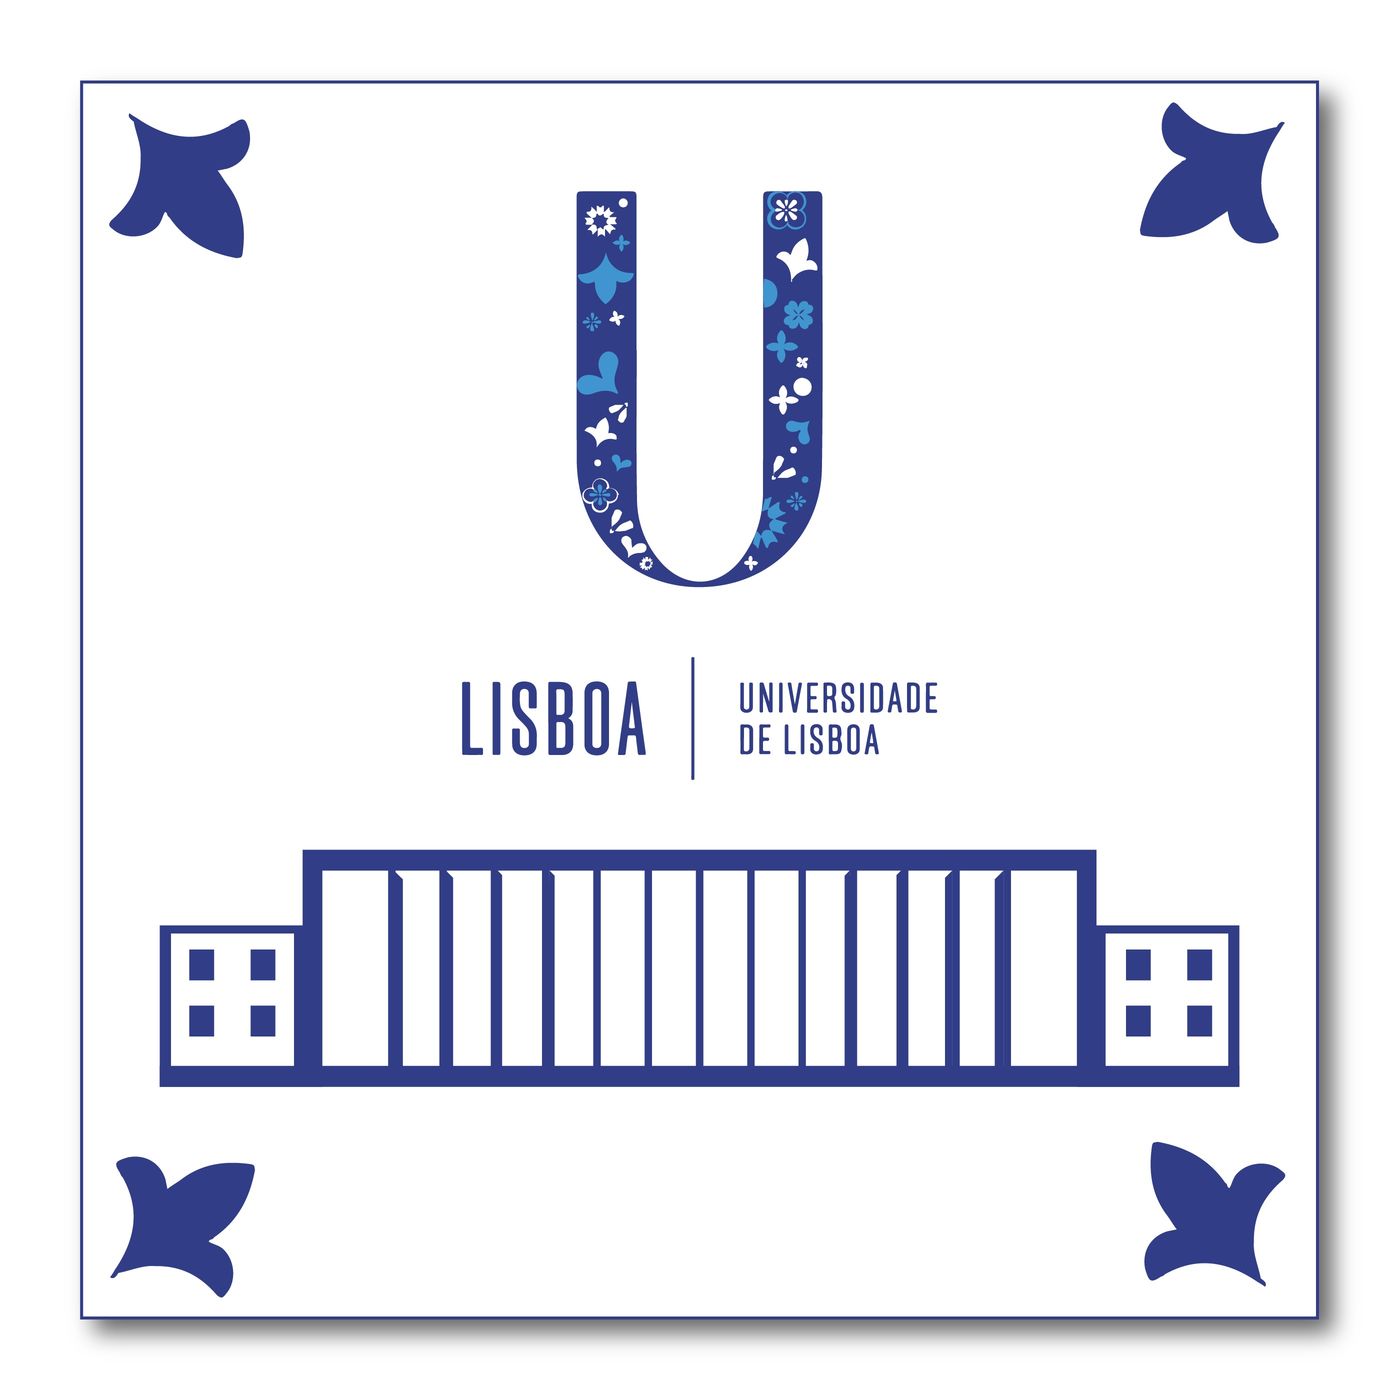 #002 - Como estudar na Universidade de Lisboa